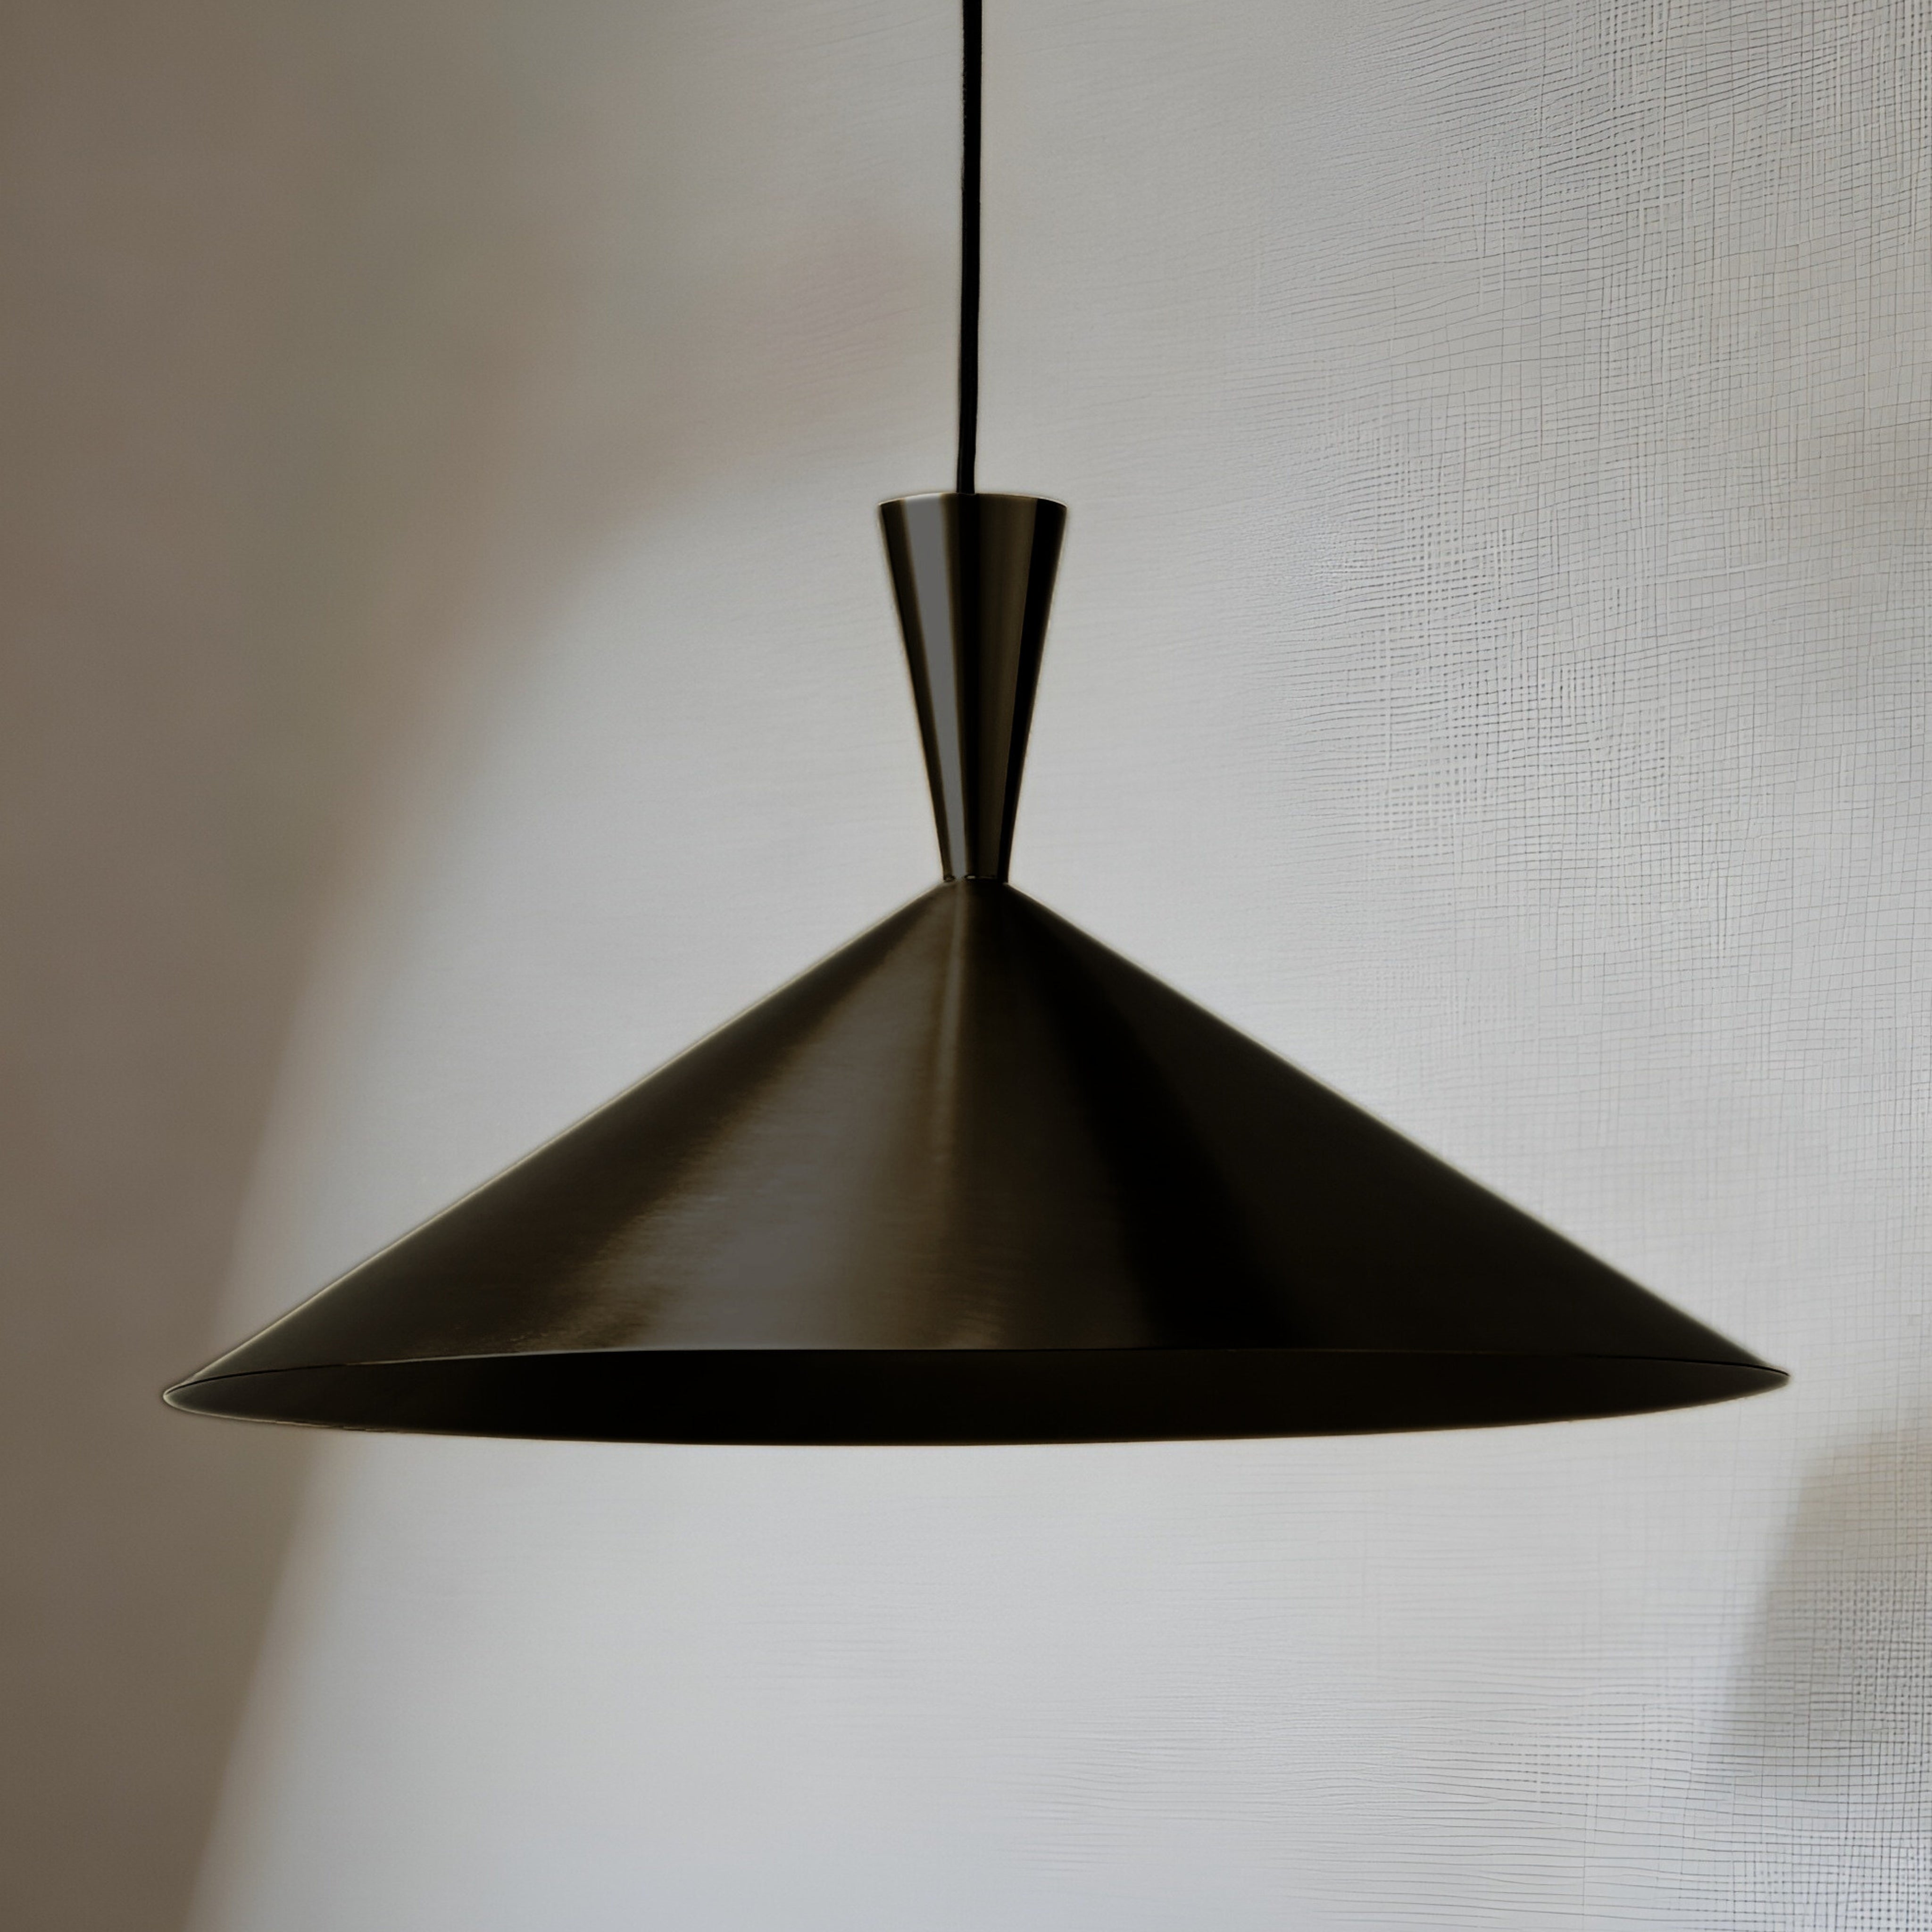 Set of 2 Black Brass Cone Pendant Light, Hanging Ceiling Lamp